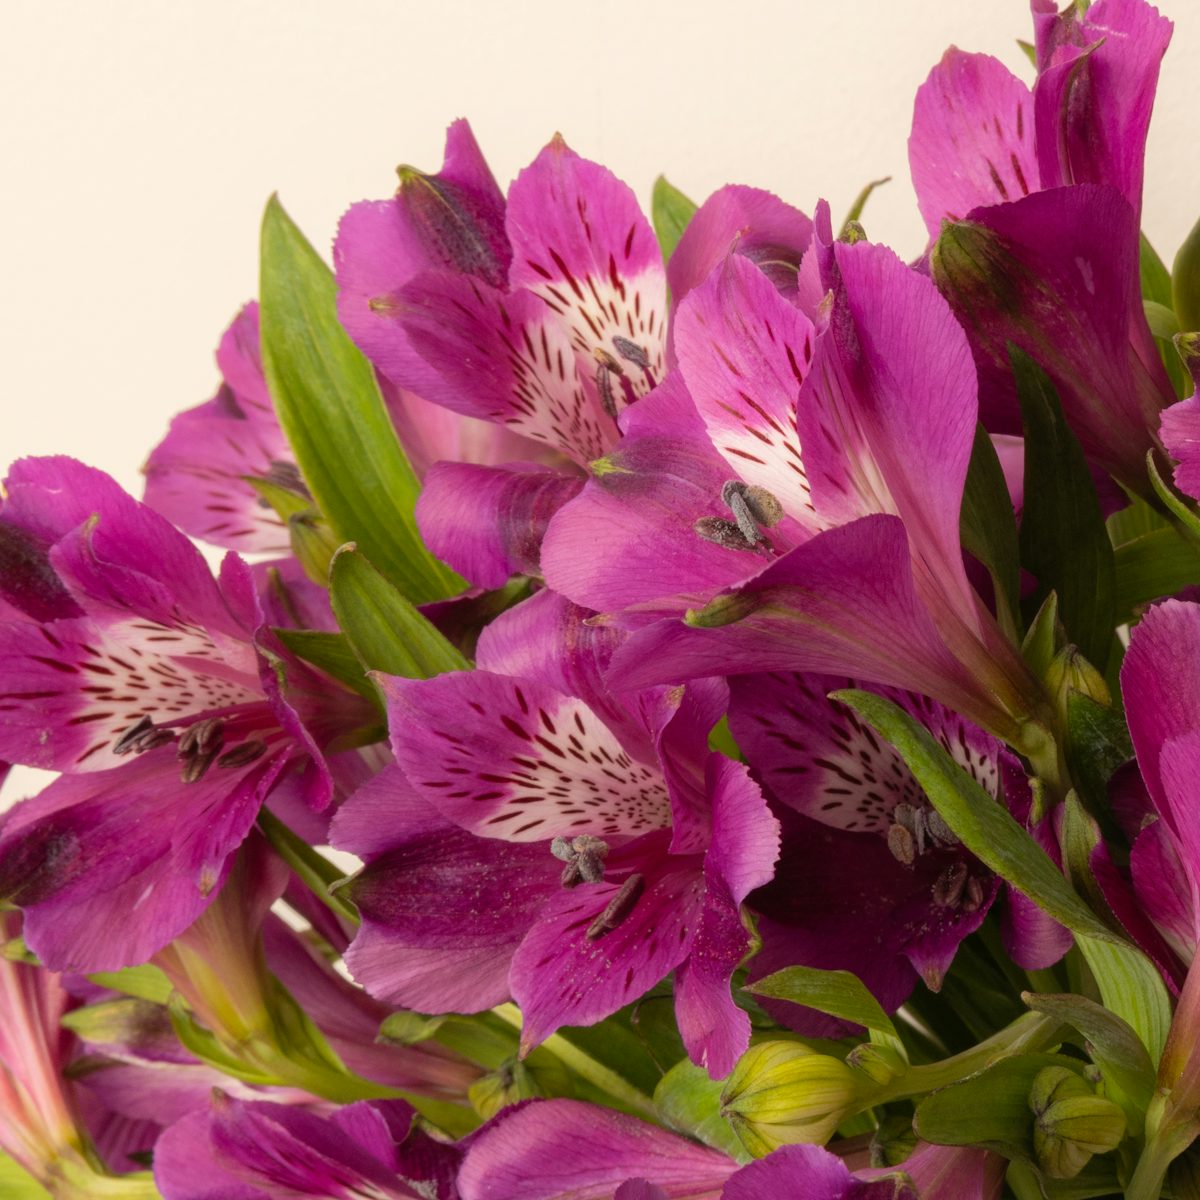 Bouquet Alstroemeria